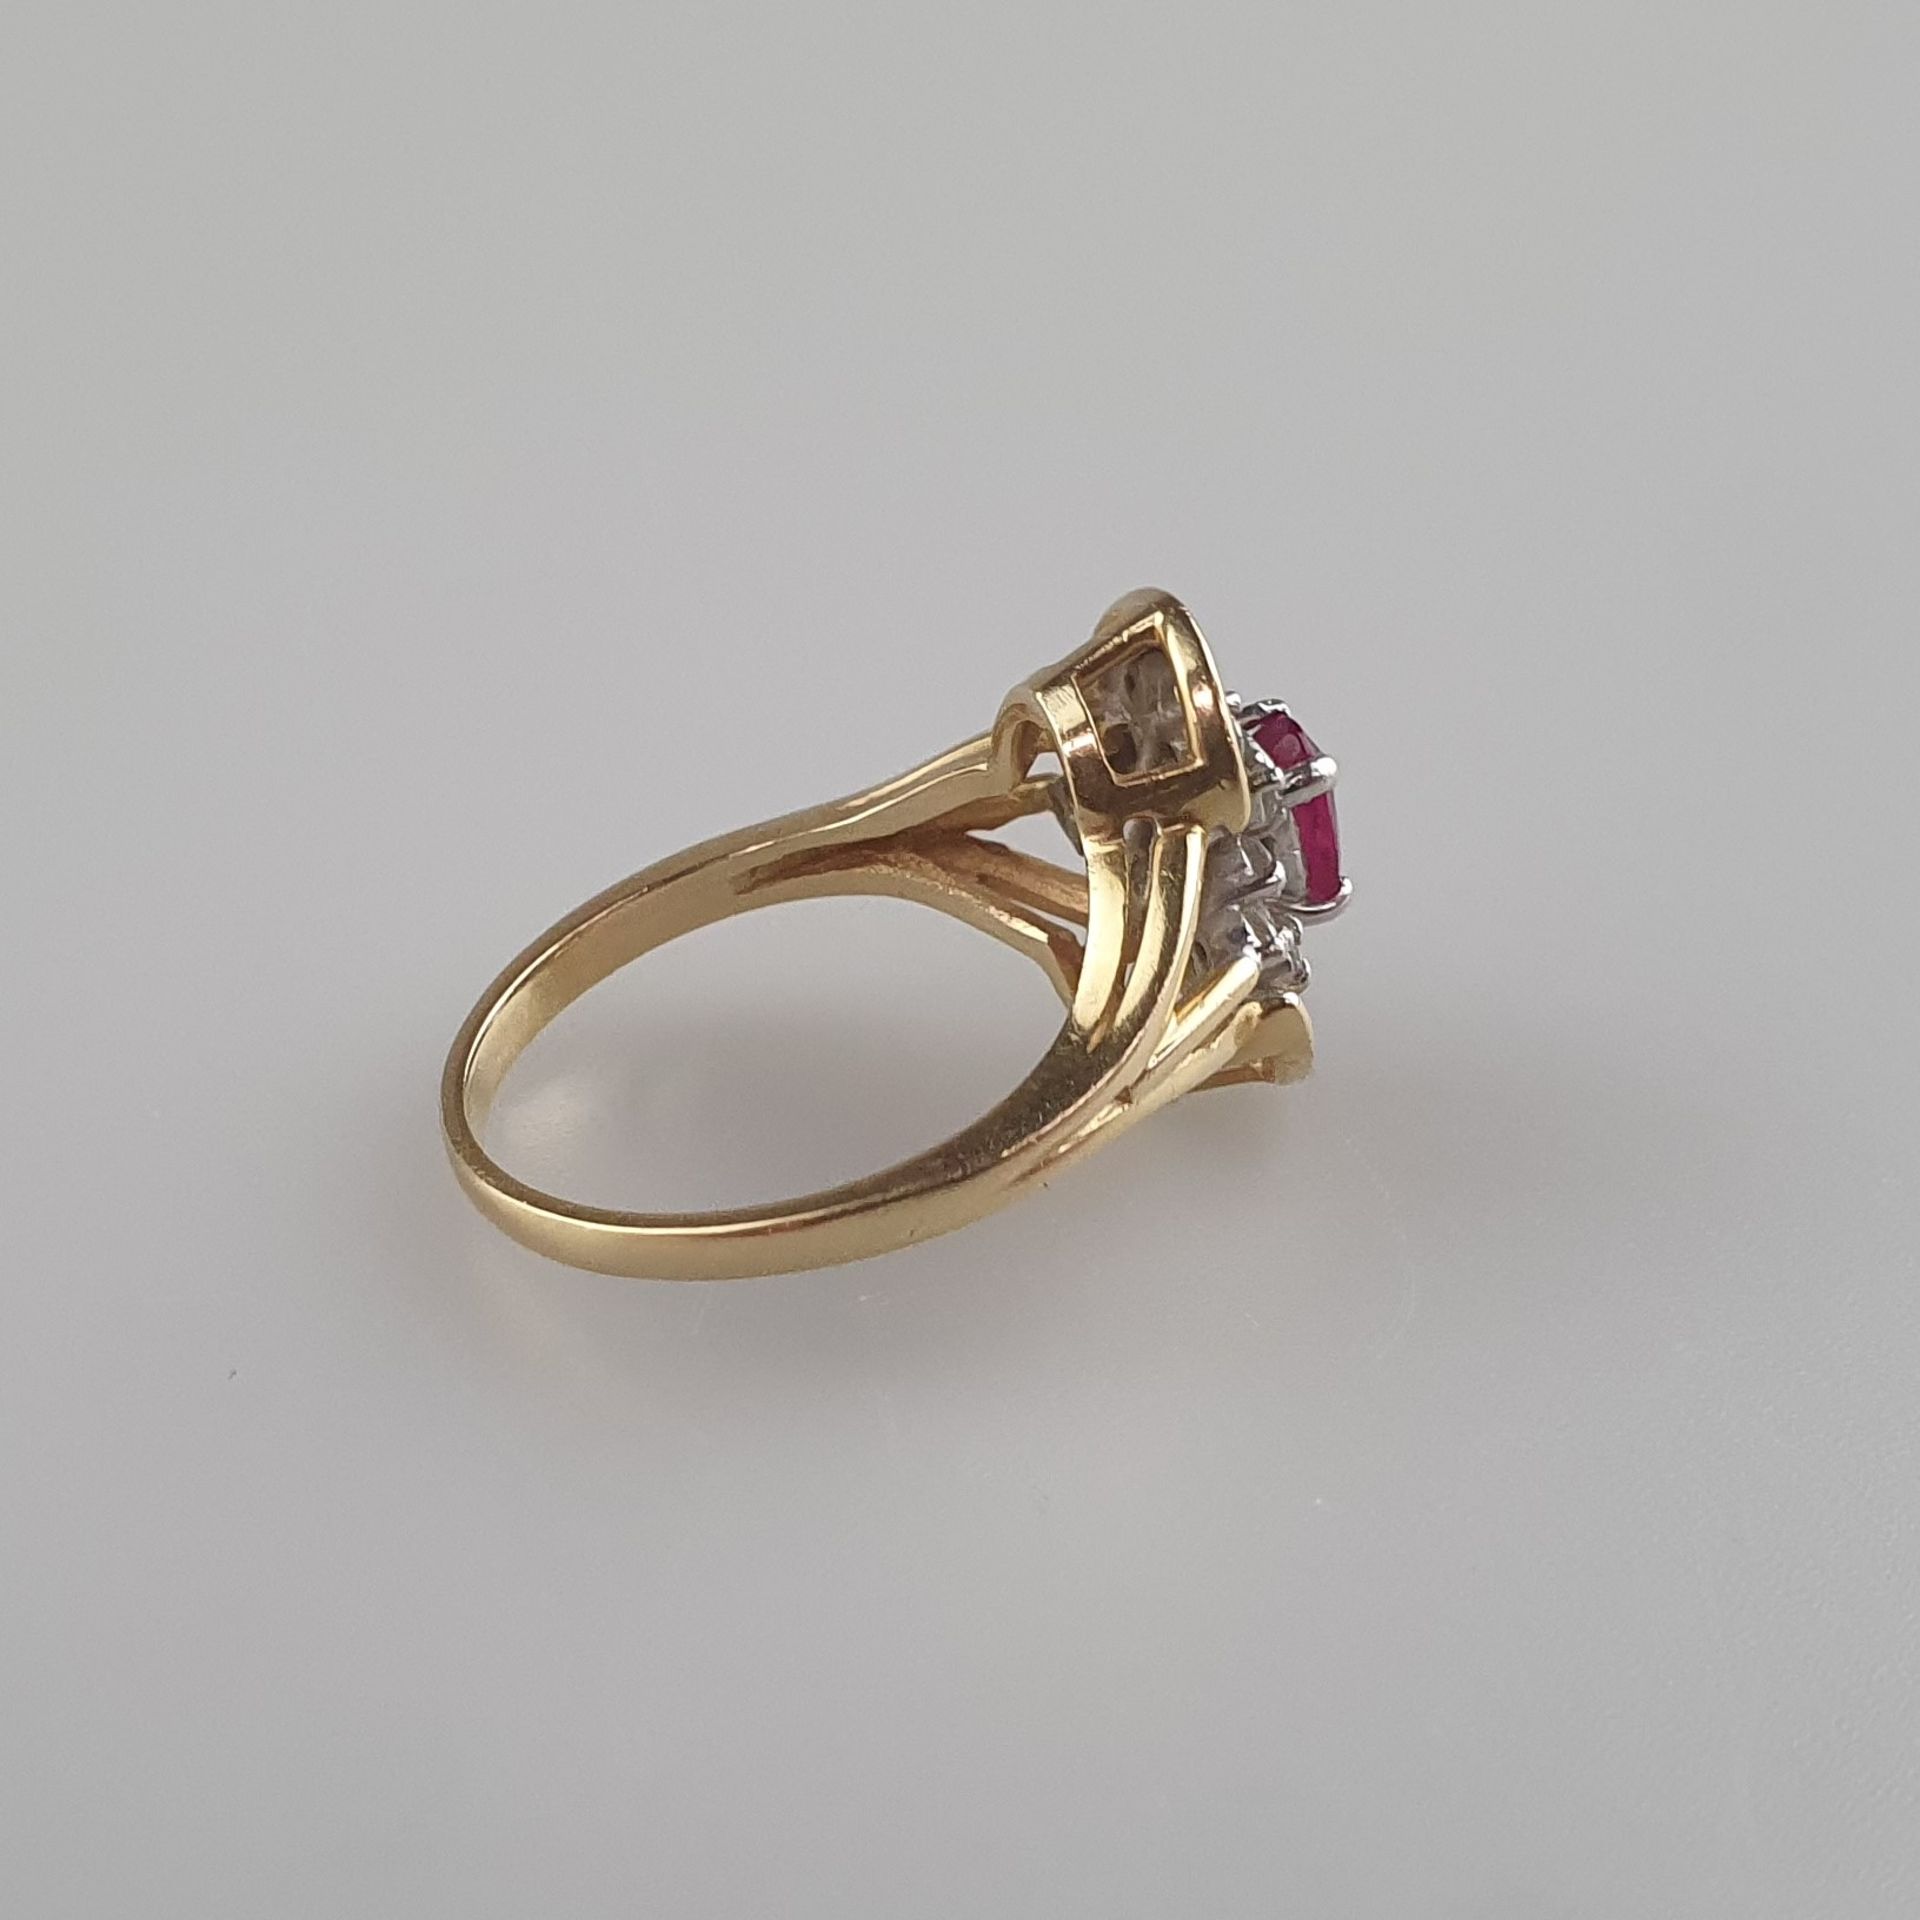 Diamant-Rubin-Ring - Gelbgold 585/000, gestempelt 14K, durchbrochener floraler Ringkopf von ca. 15 - Image 3 of 6